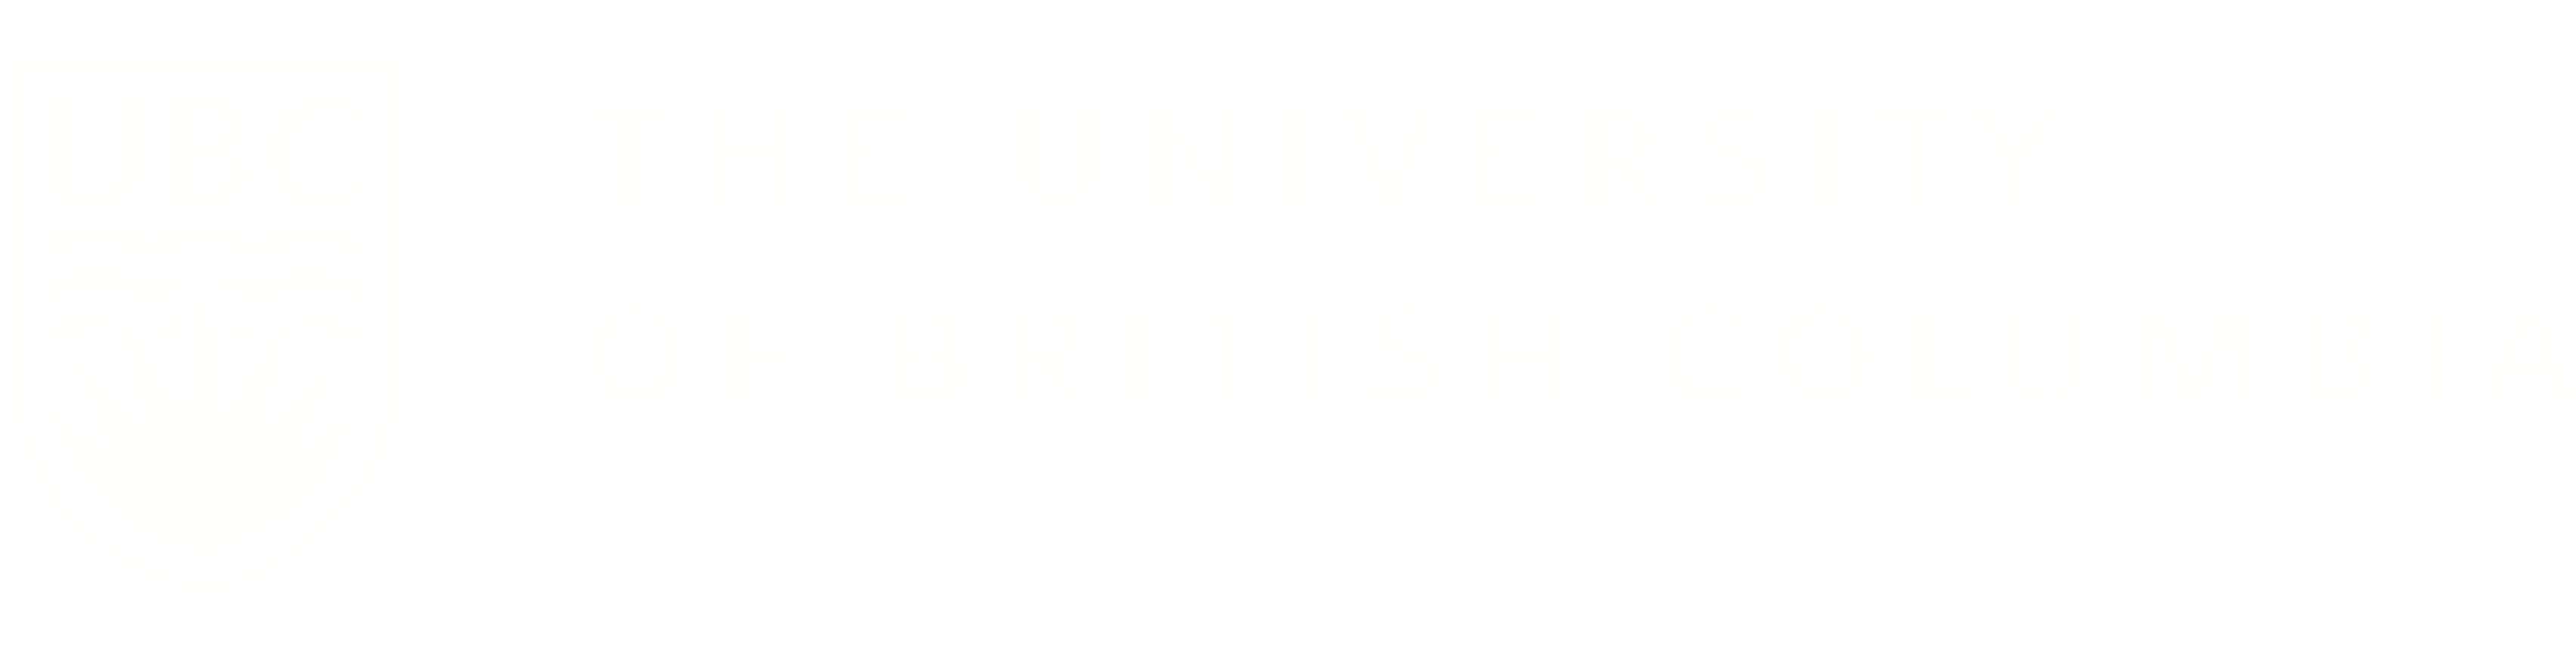 ubc logo 1